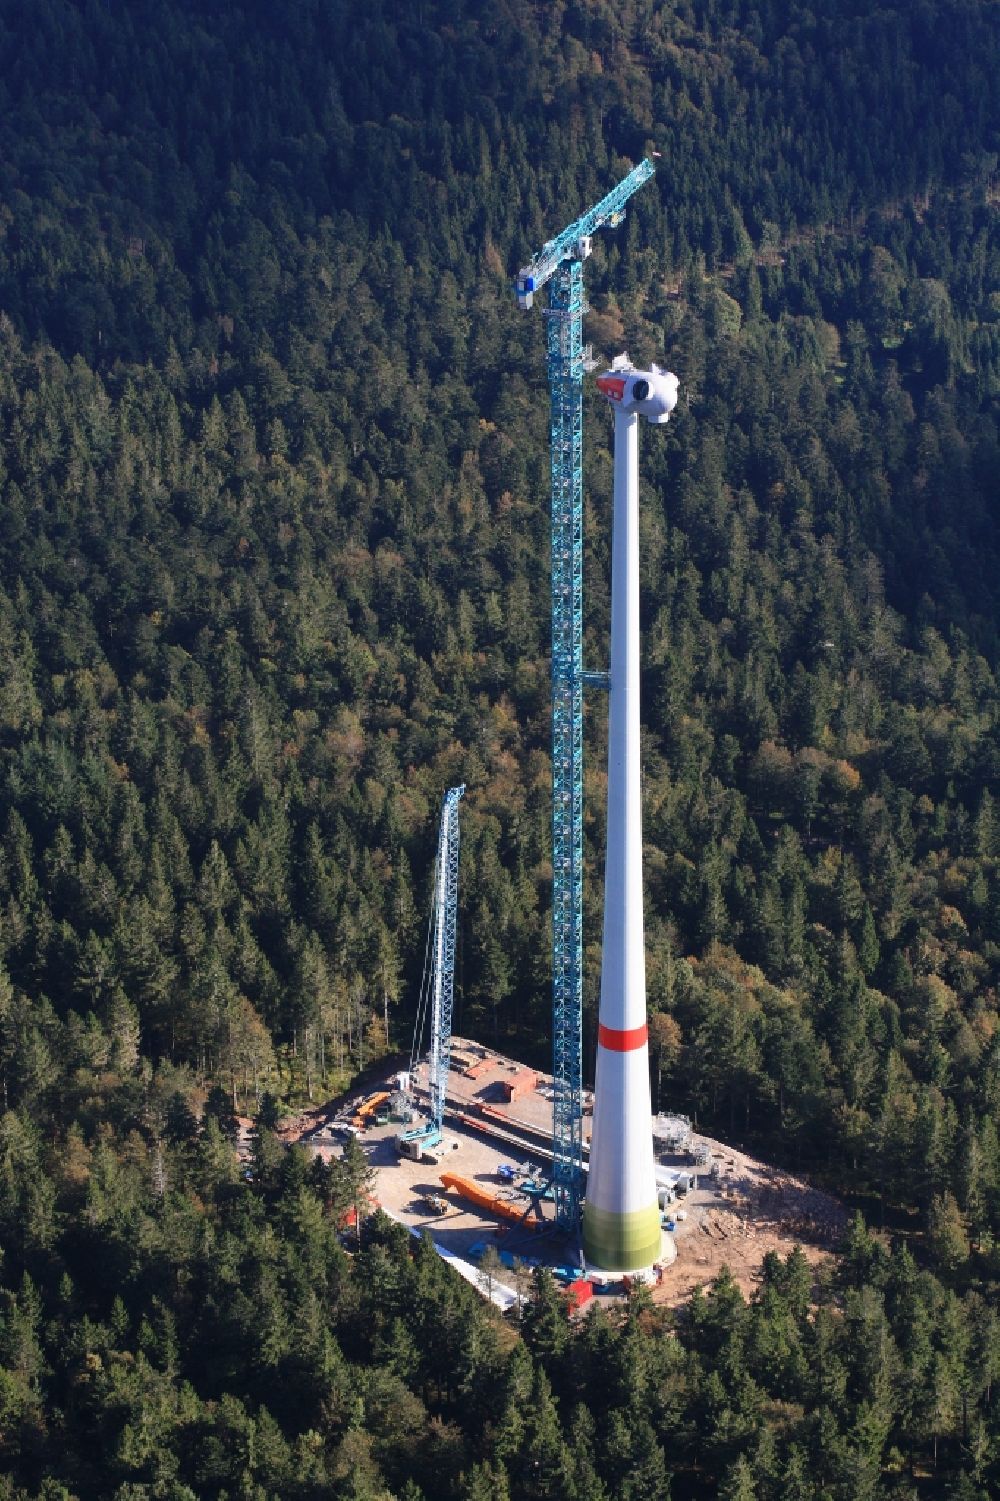 Aerial photograph Schopfheim - On the Rohrenkopf, the local mountain of Gersbach, a district of Schopfheim in Baden-Wuerttemberg, 5 wind turbines are built by Enercon